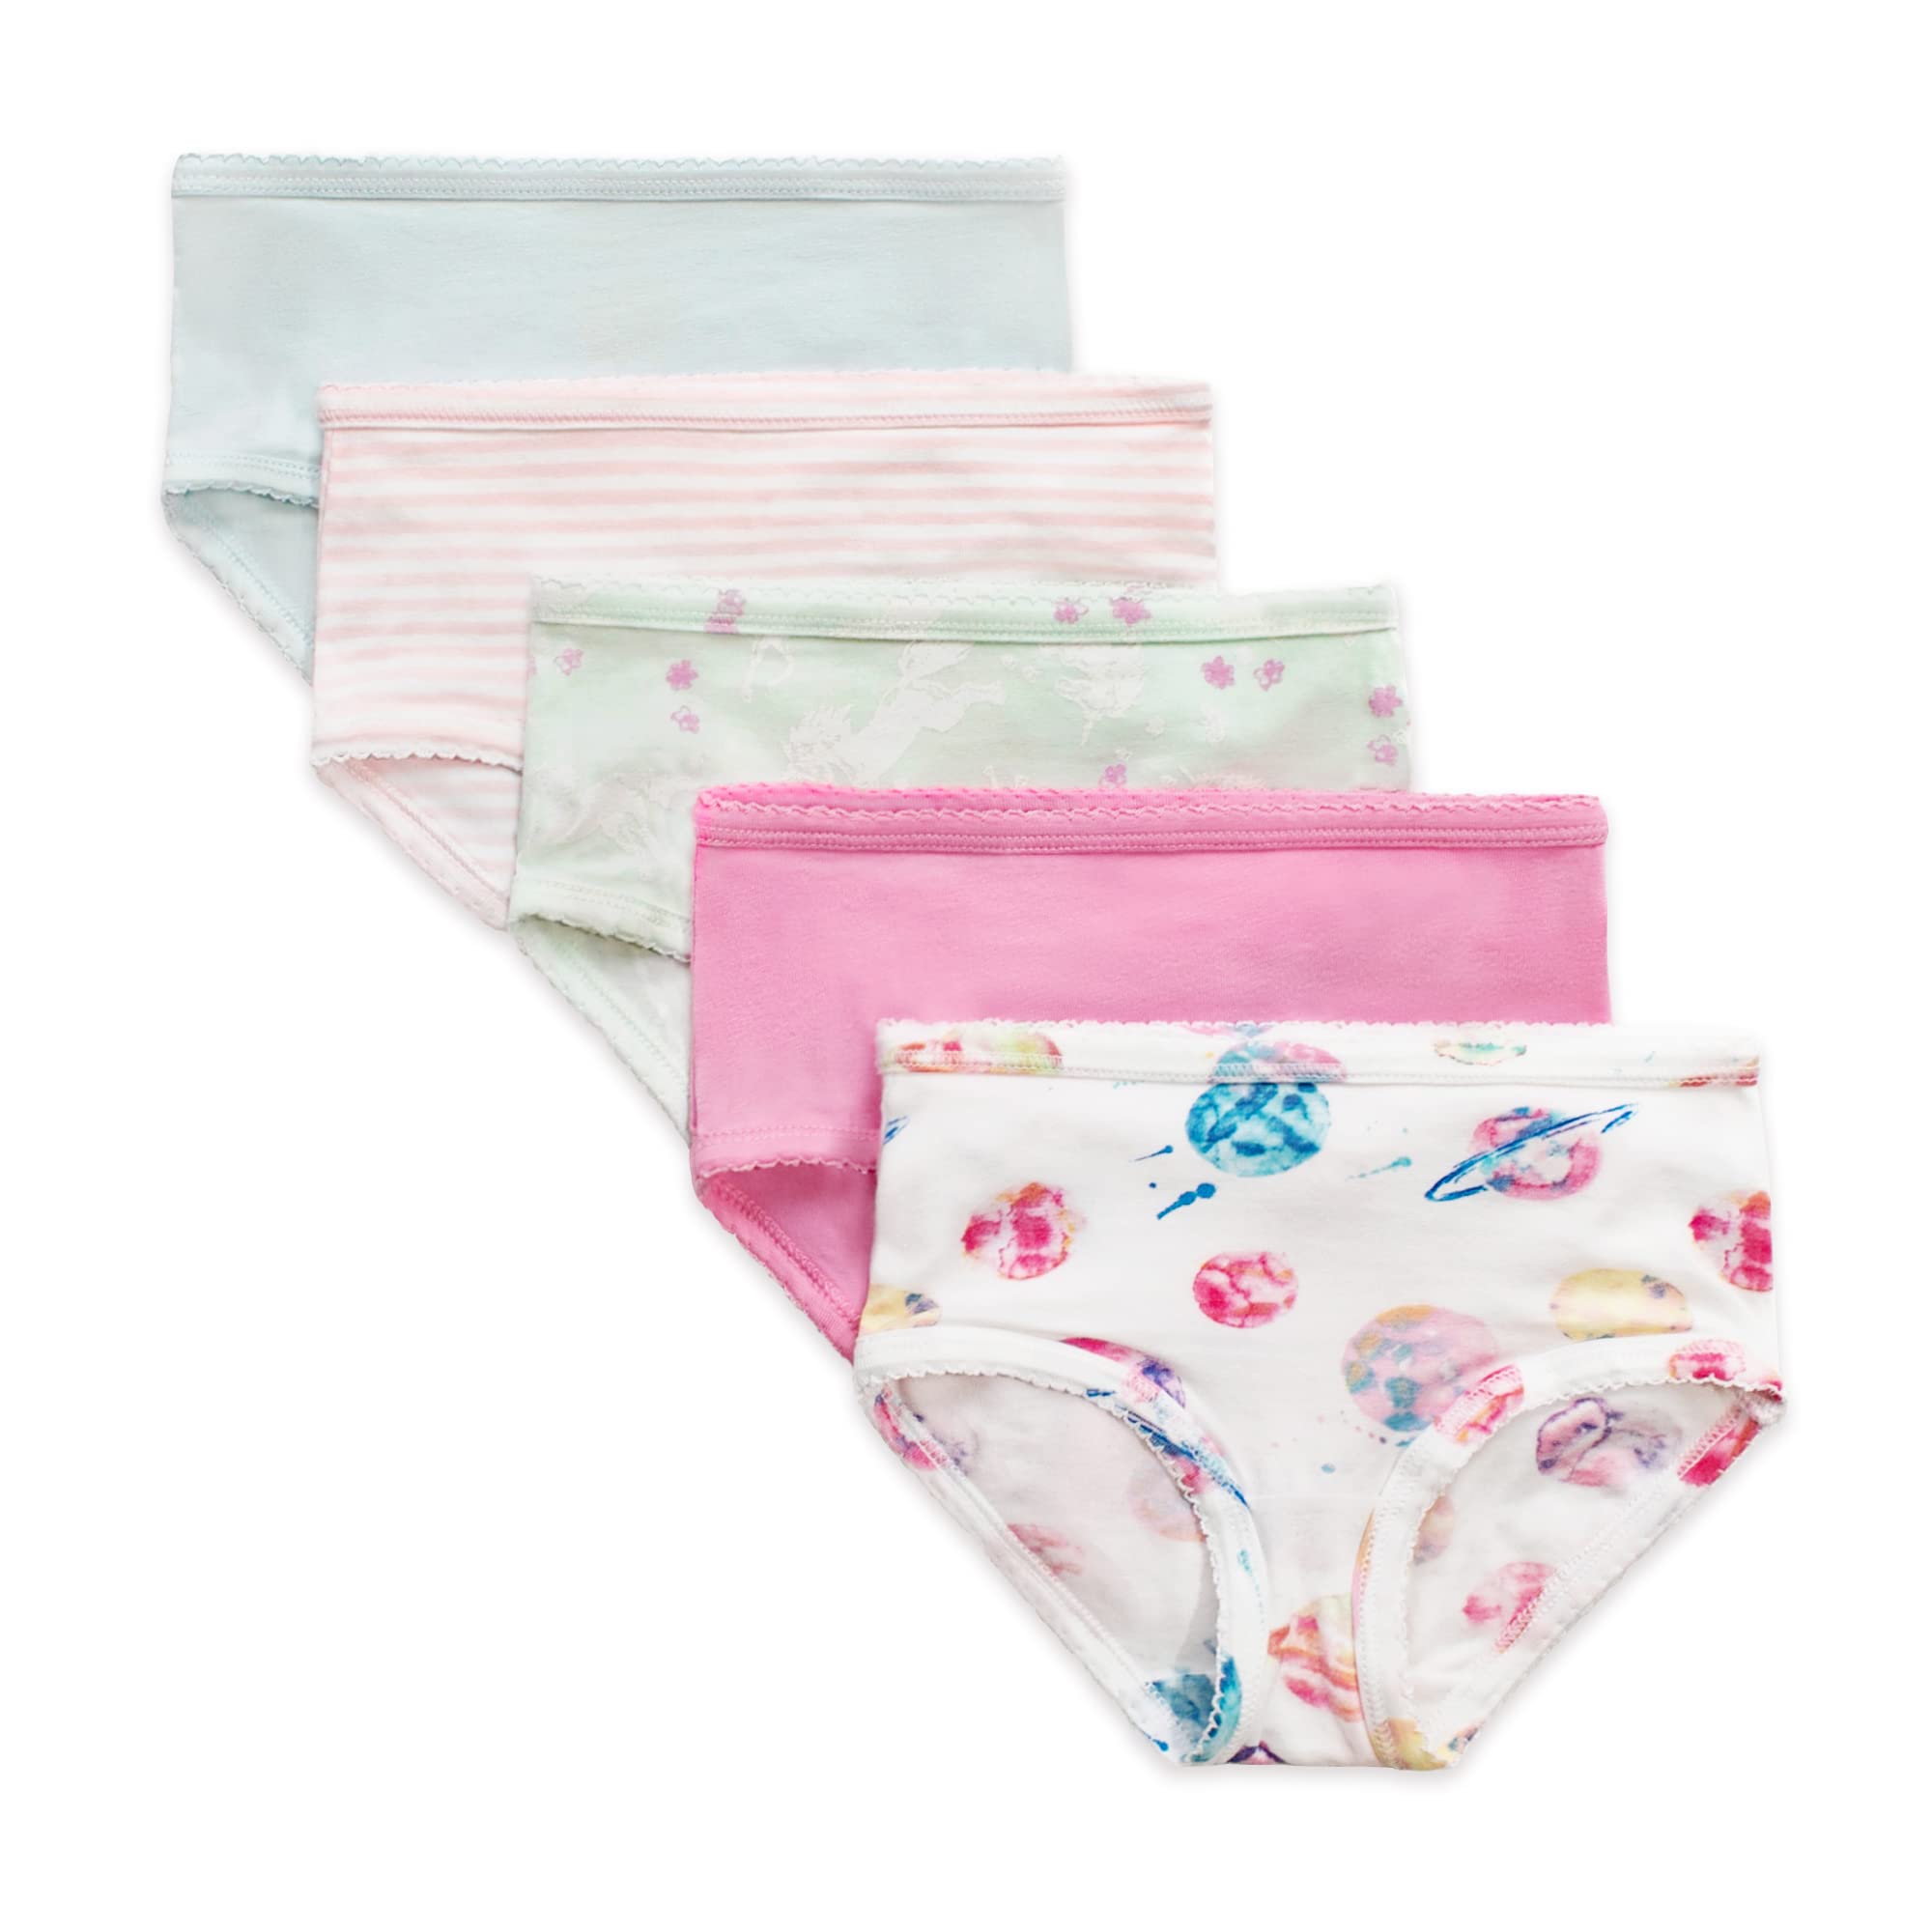 Burt's Bees Baby Toddler Girls' Underwear, Organic Cotton Panties, Tag-Free Comfort Briefs, Pack of 8